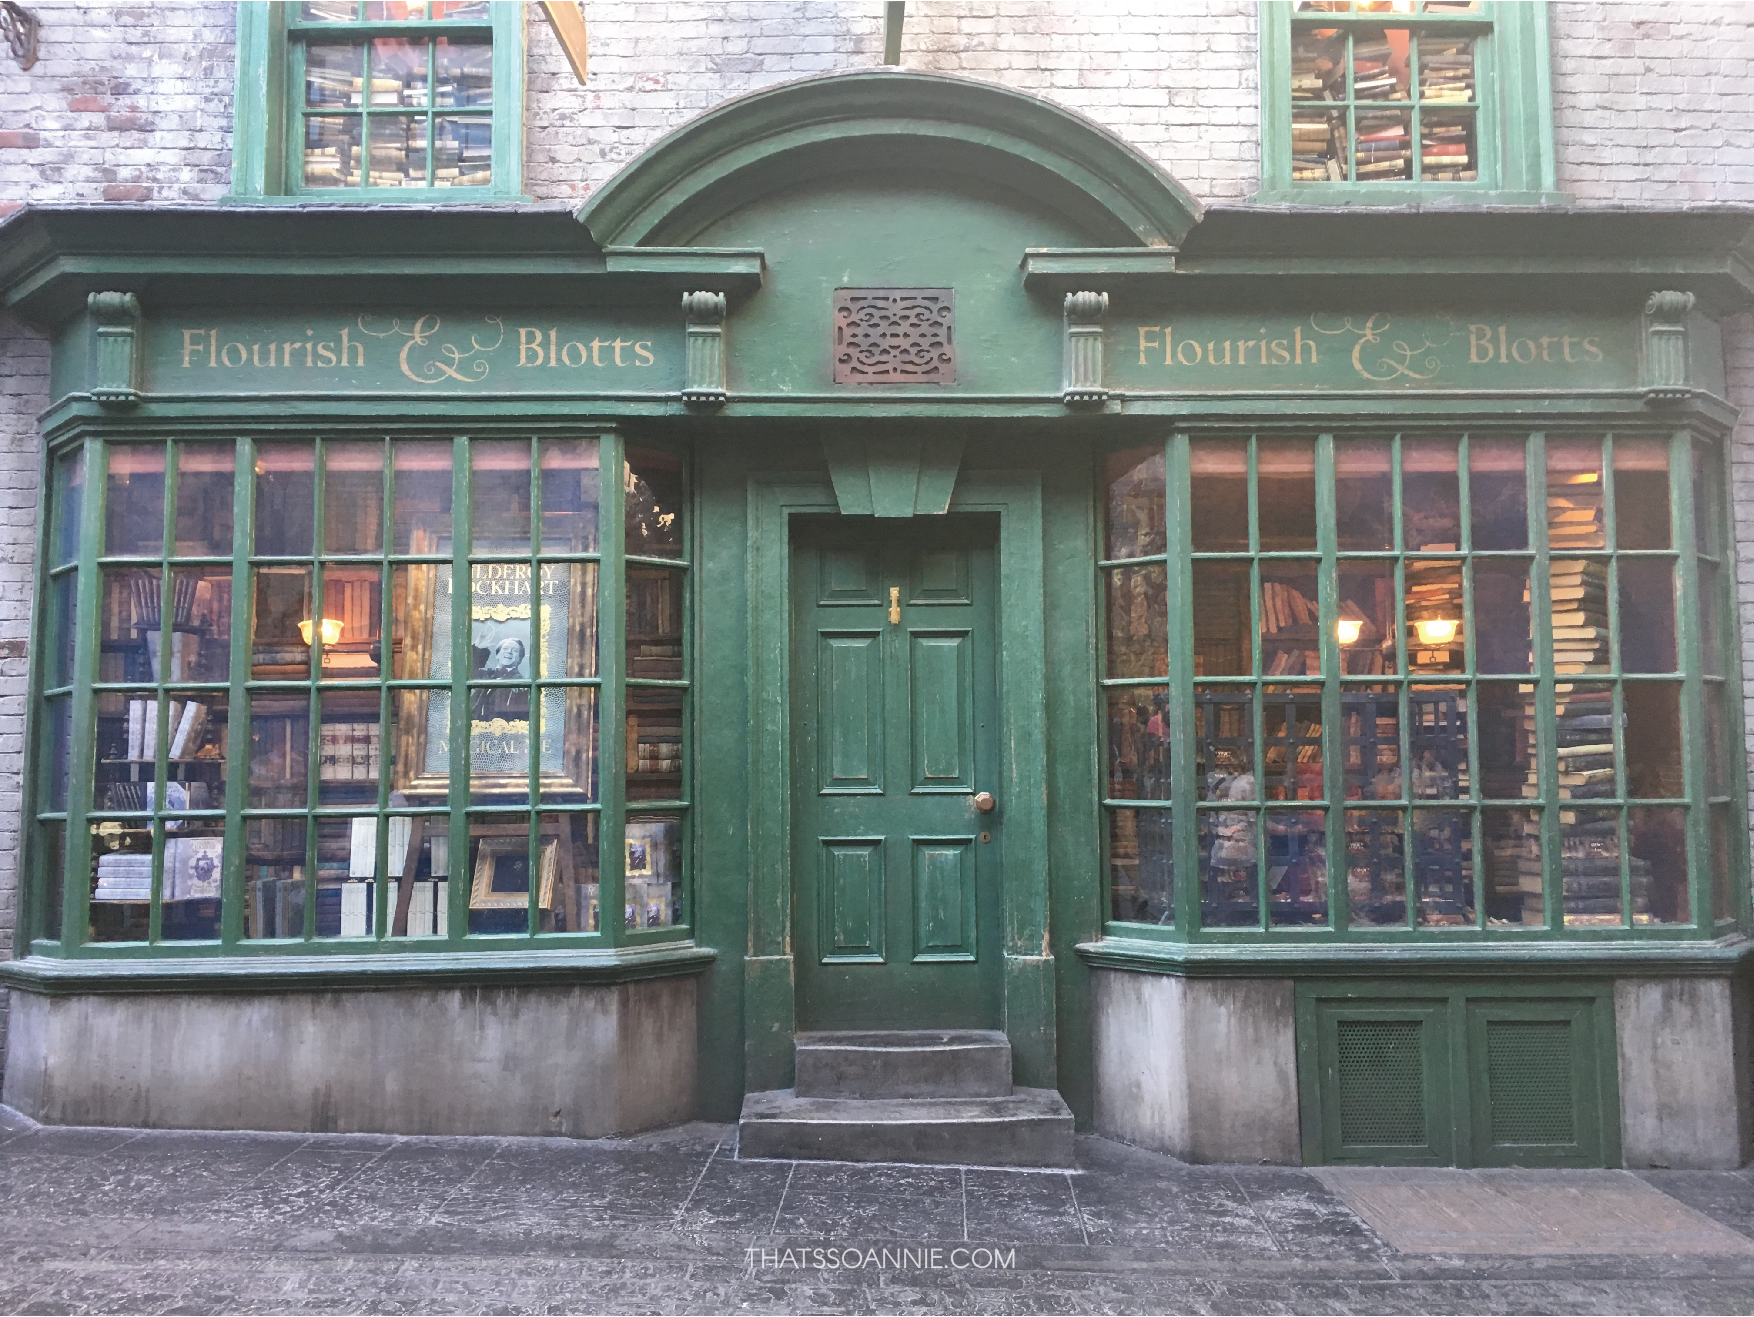 Flourish & Blotts, Diagon Alley, The Wizarding World of Harry Potter